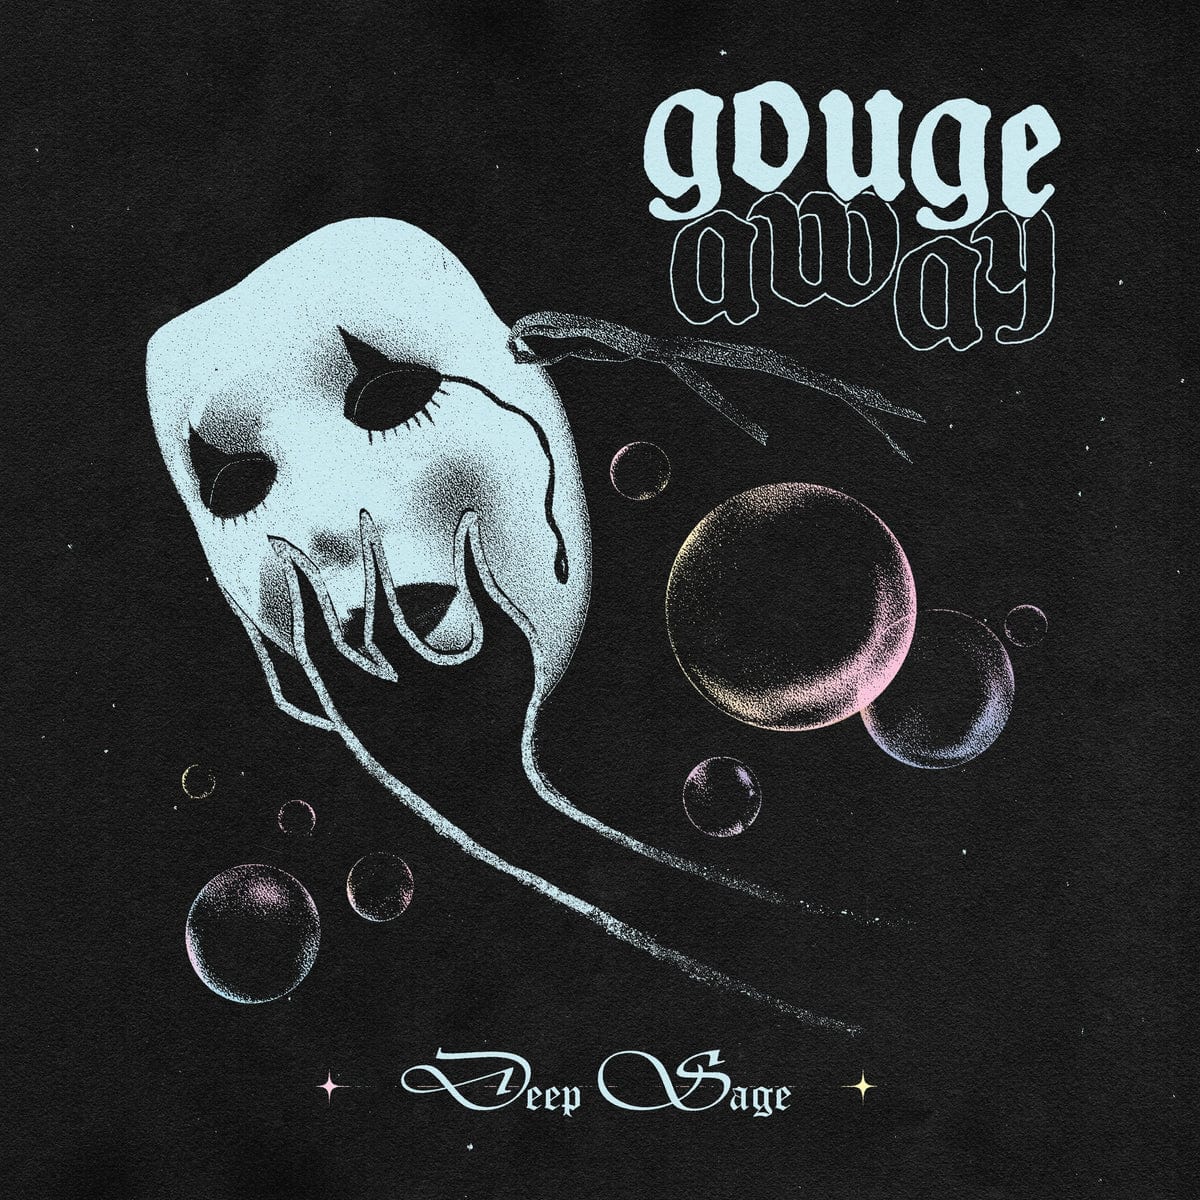 Deathwish Inc. Vinyl Gouge Away "Deep Sage" LP